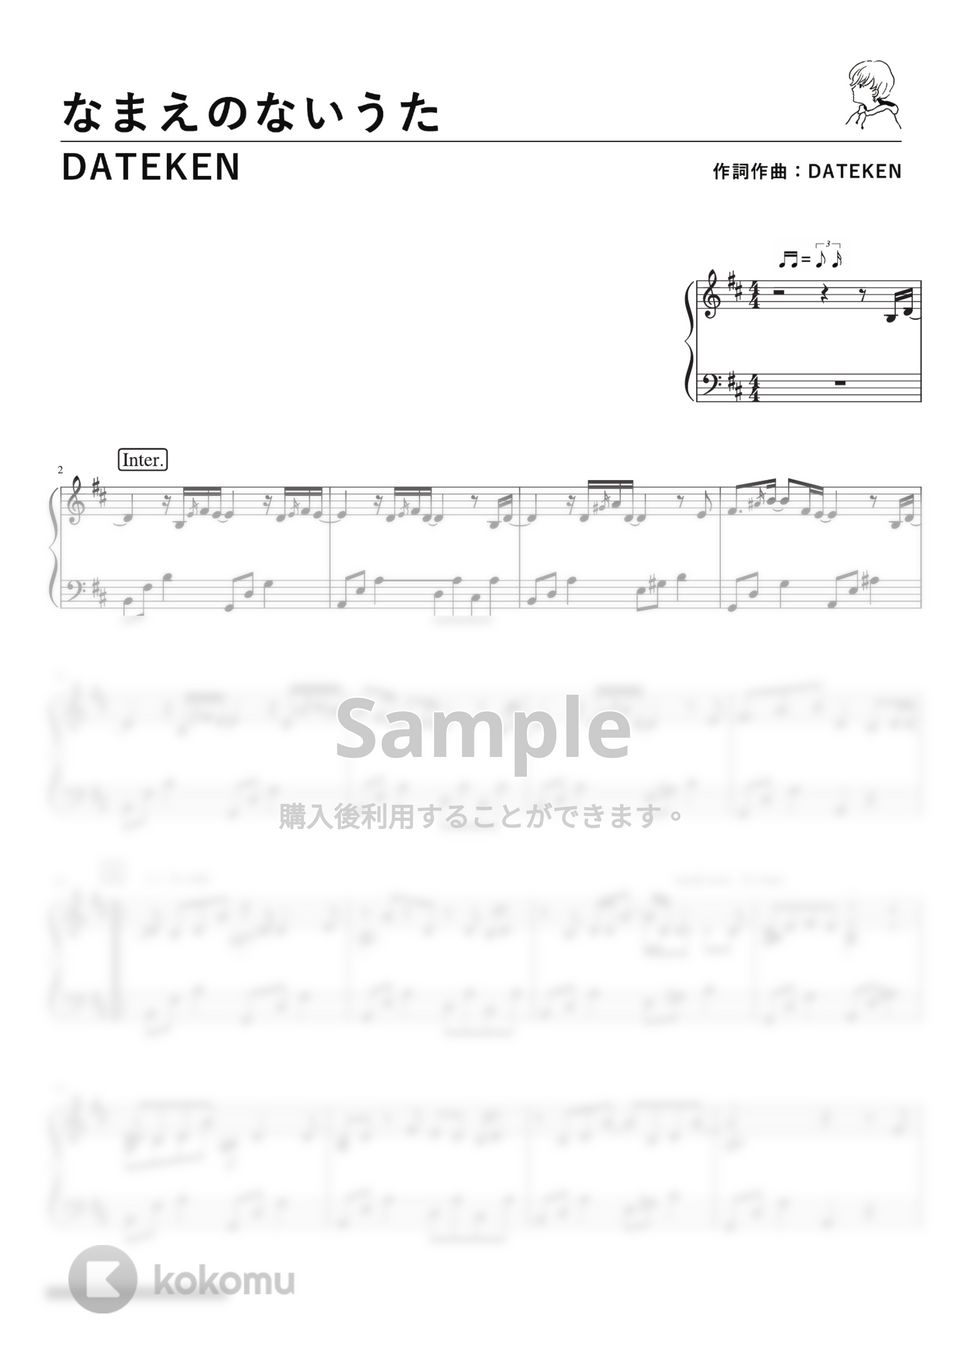 DATEKEN - なまえのないうた (PianoSolo) by 深根 / Fukane